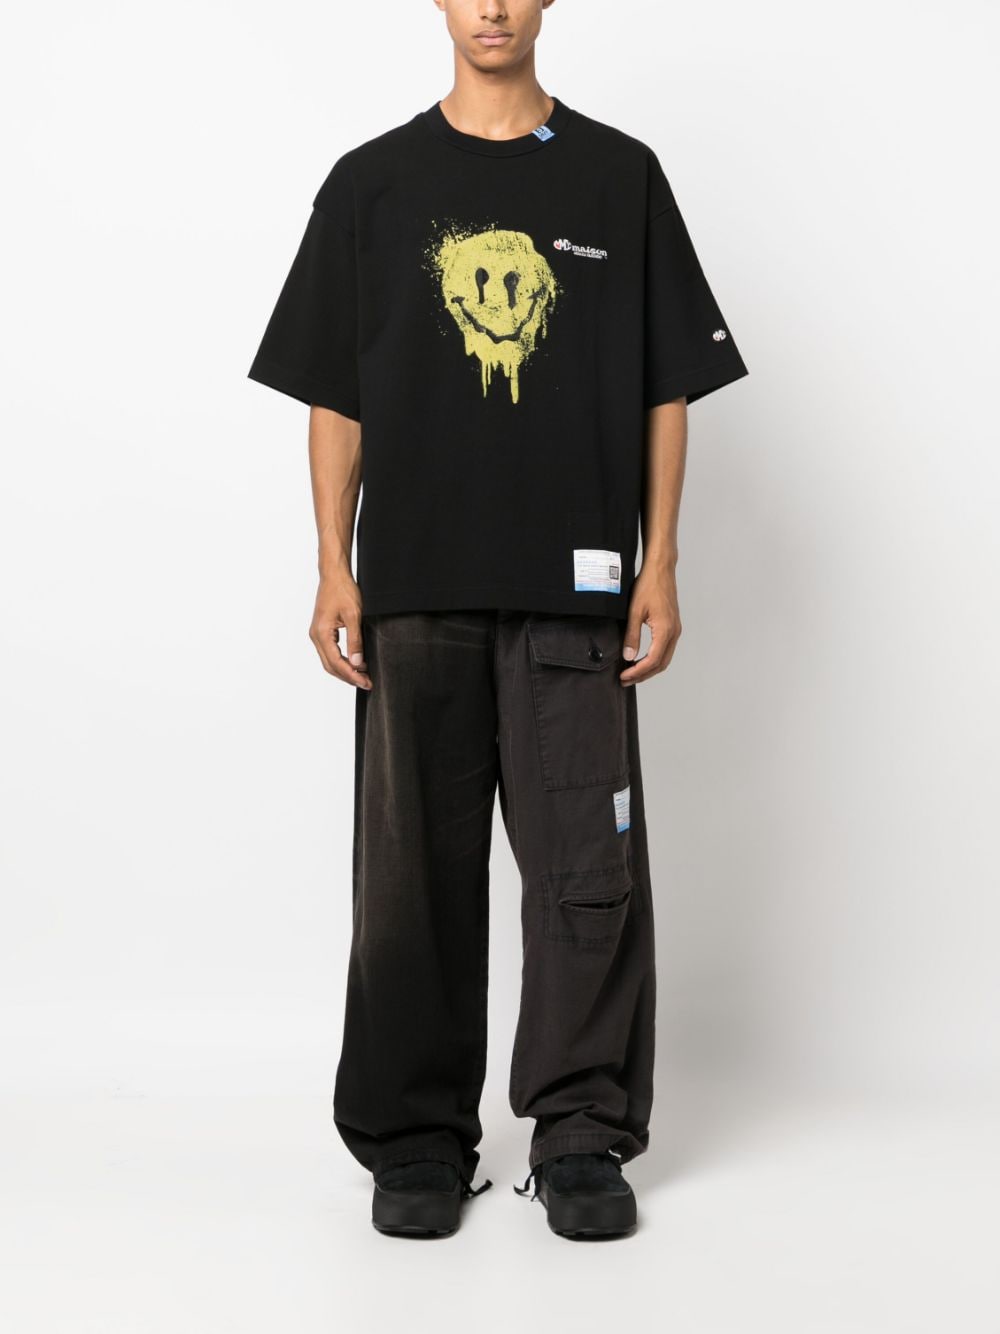 Maison Mihara Yasuhiro - T Shirt Black Smiley - Lothaire